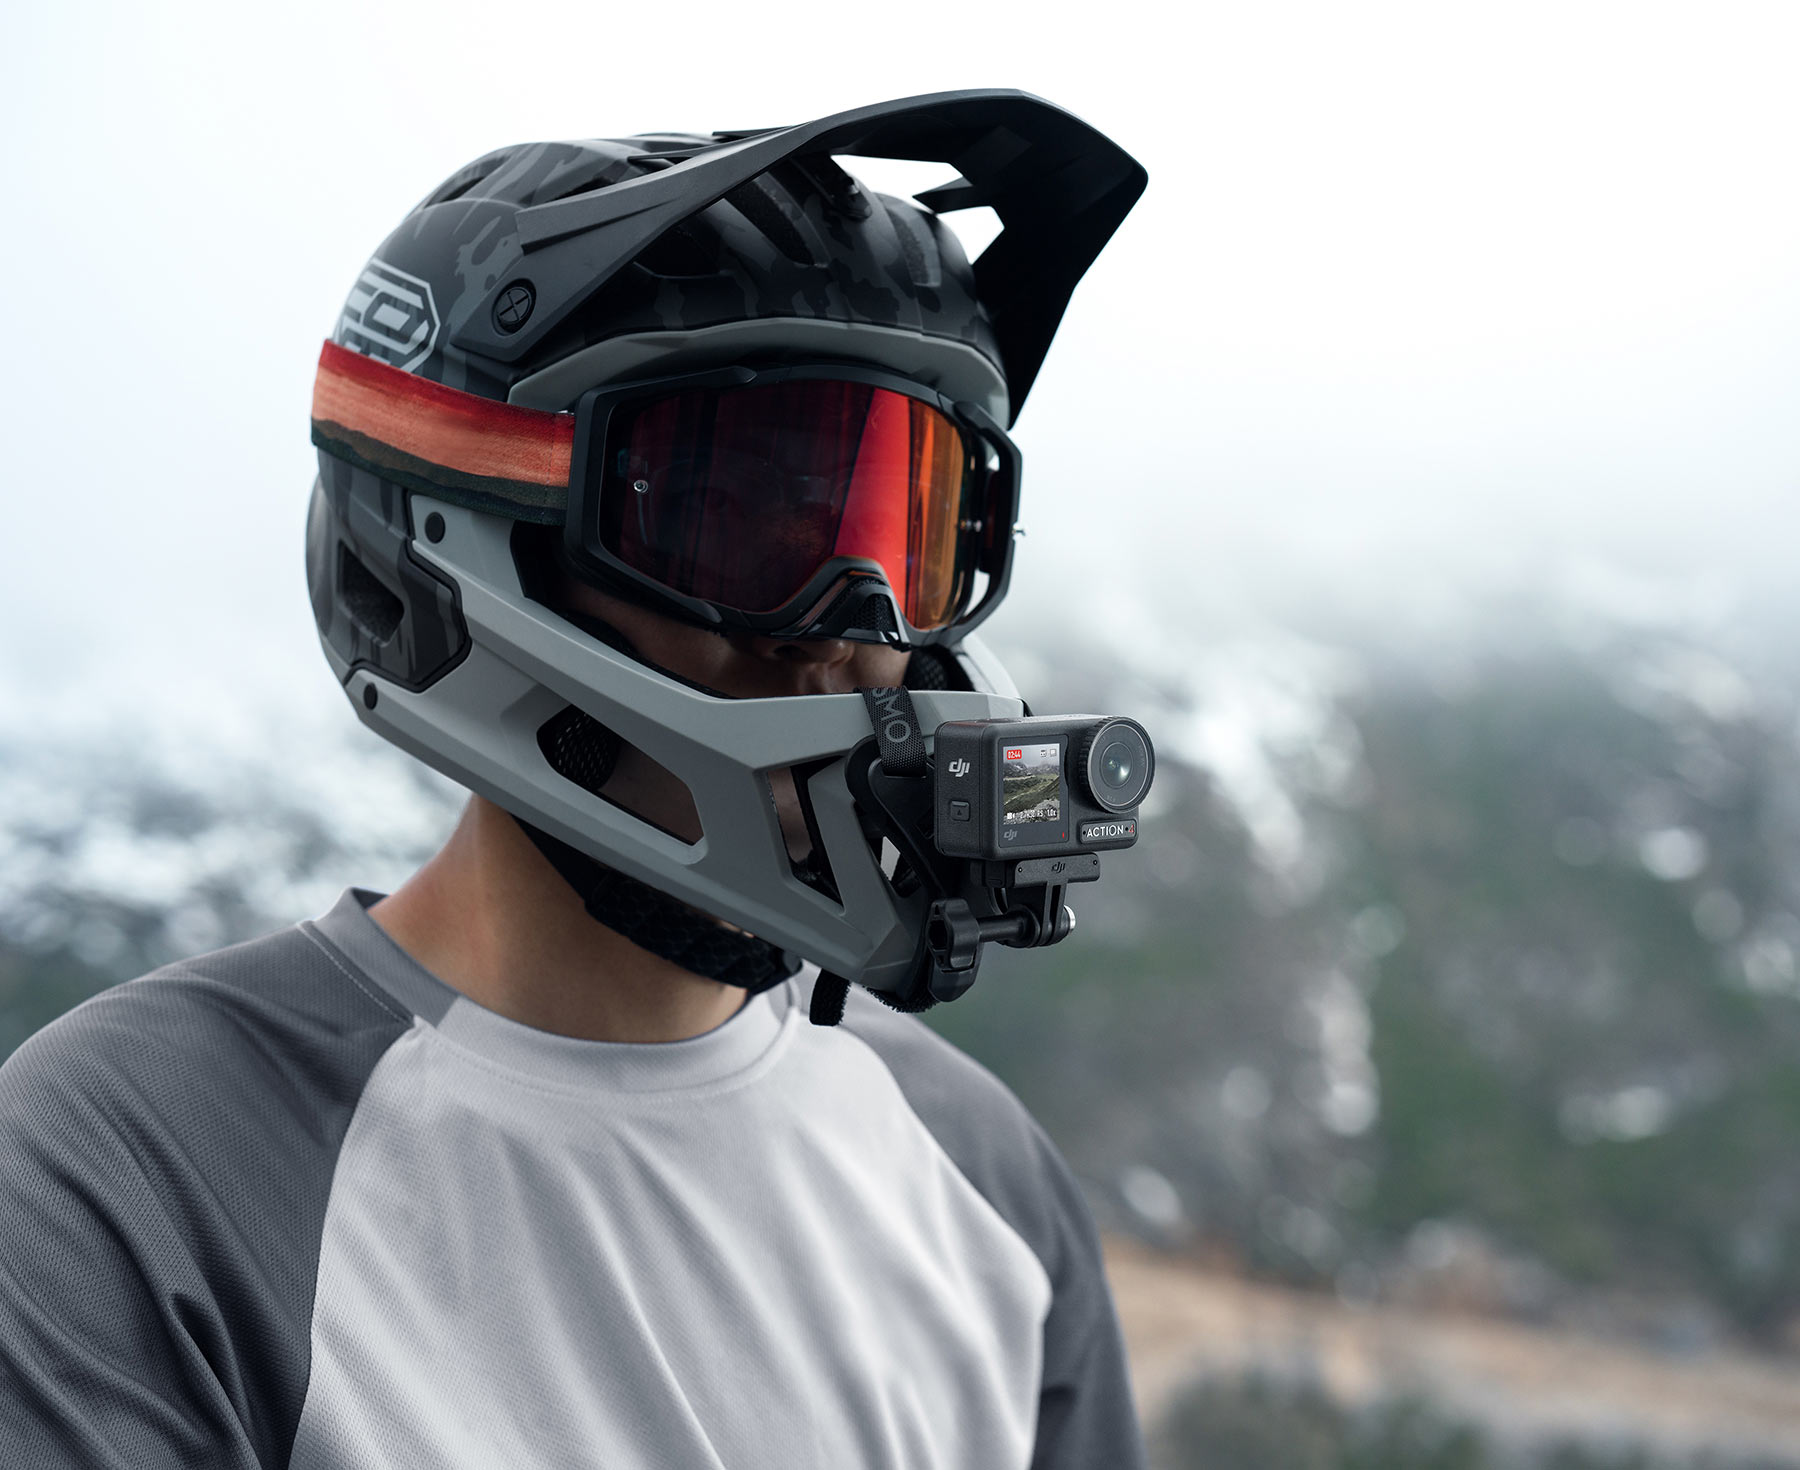 DJI Osmo Action 4 camera shown on MTB helmet